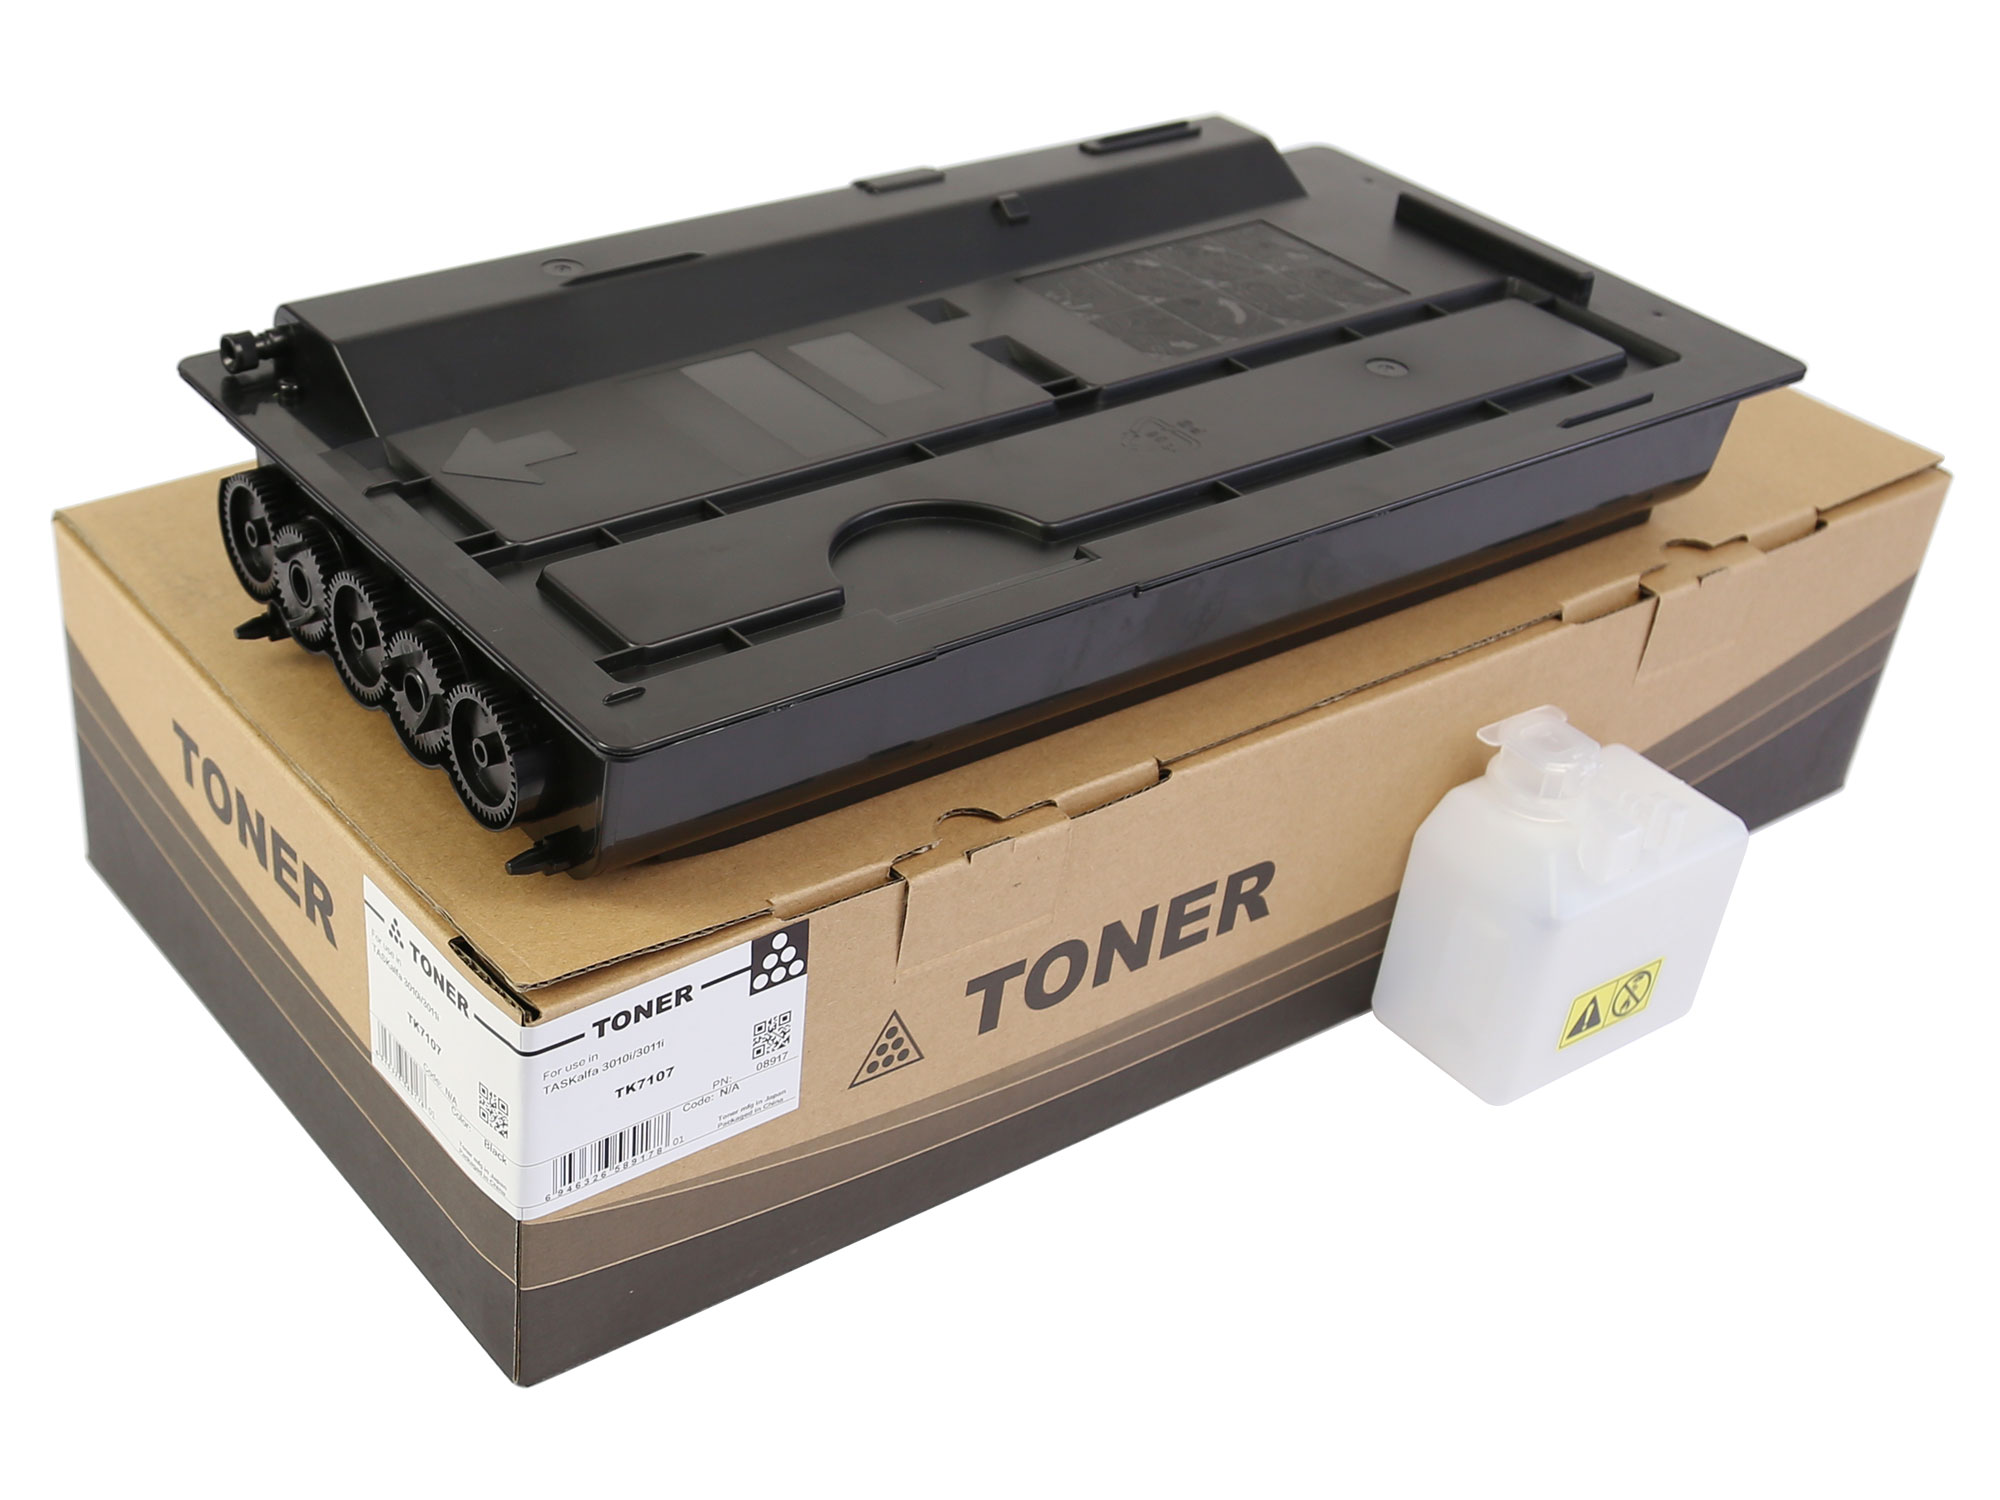 TK-7107 Toner Cartridge for Kyocera TASKalfa 3010i